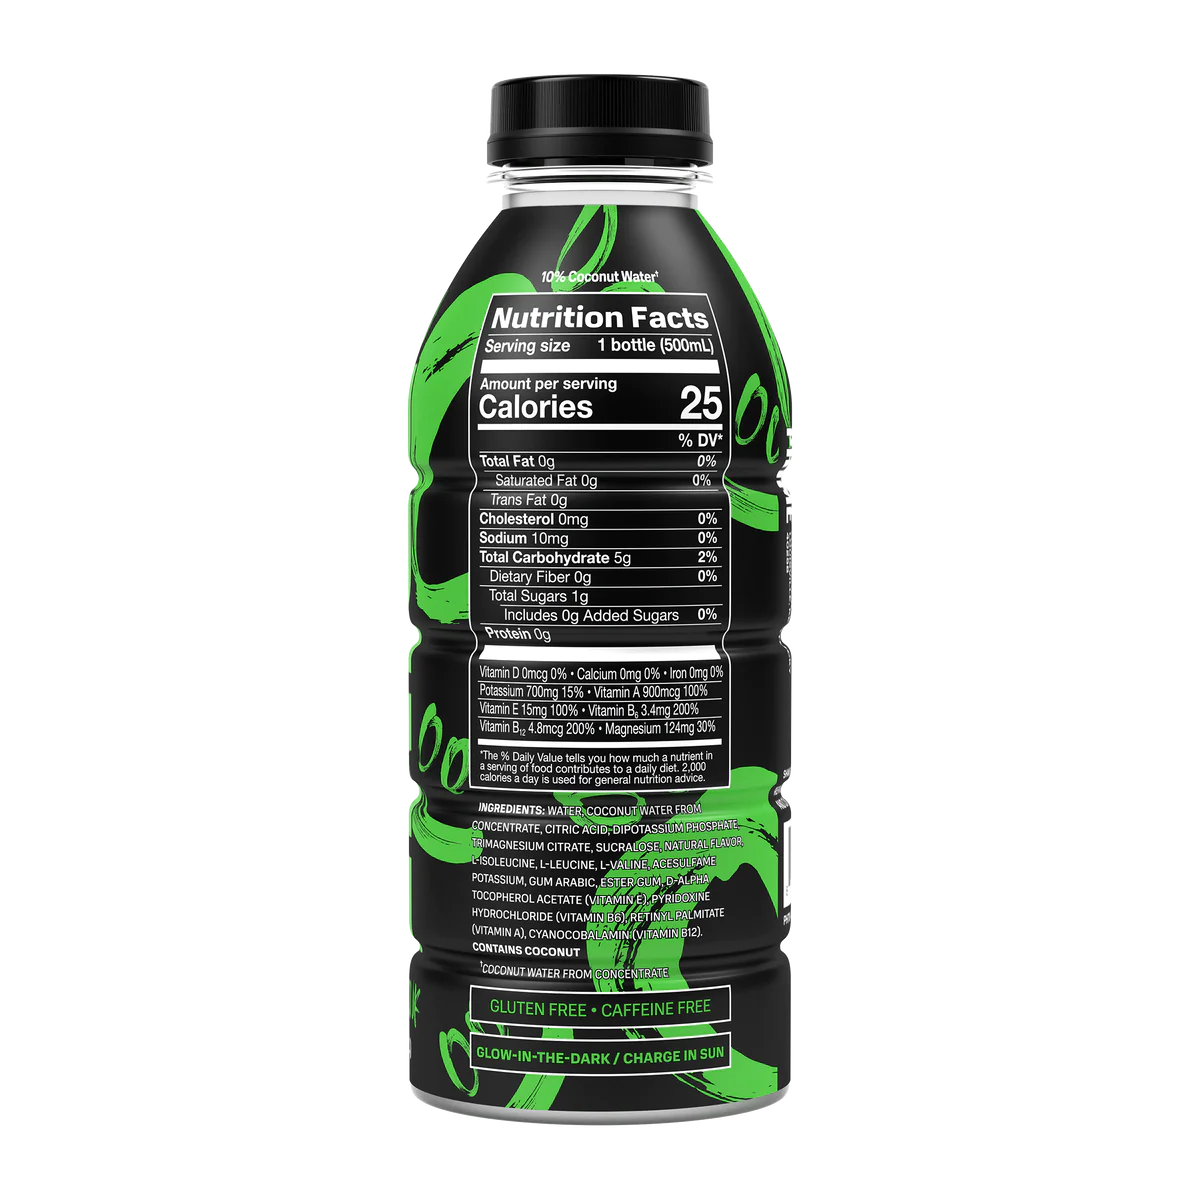 Prime Hydration Glowberry 500 ML